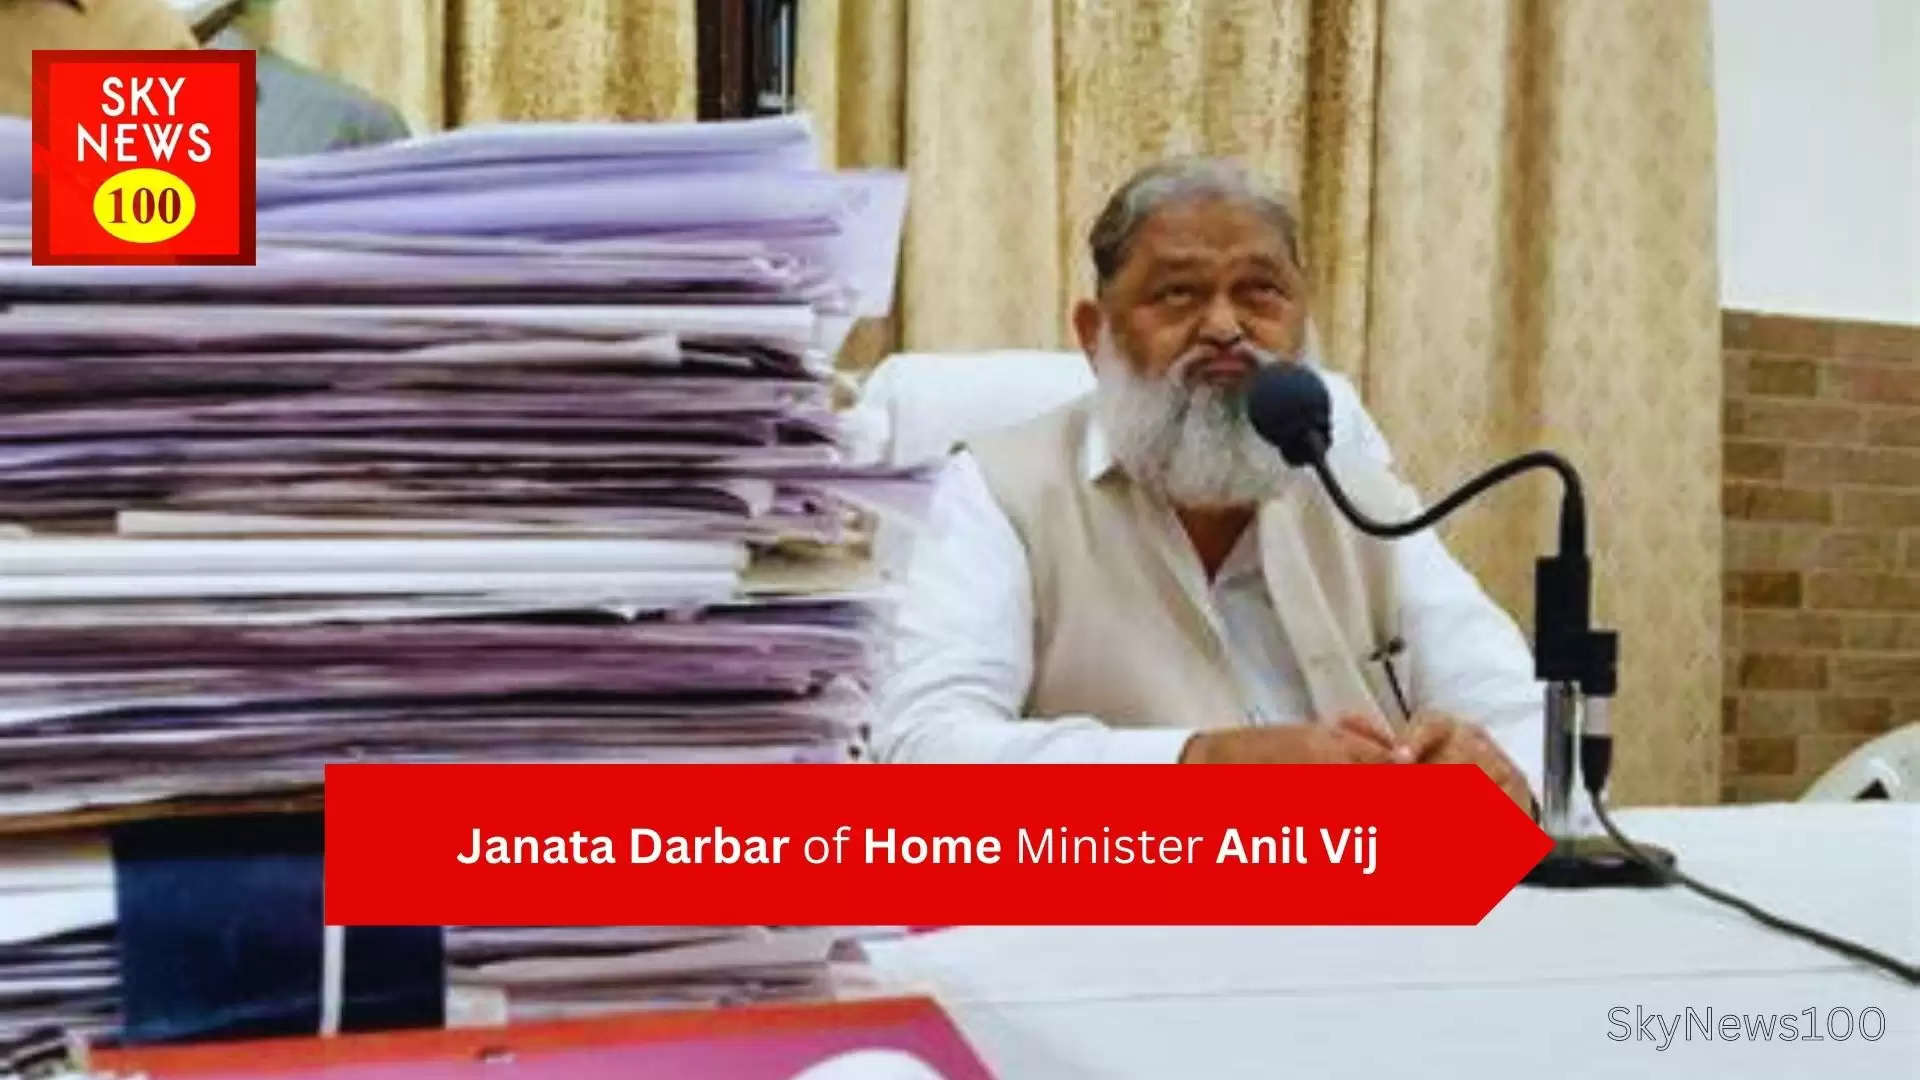 Janata Darbar of Home Minister Anil Vij